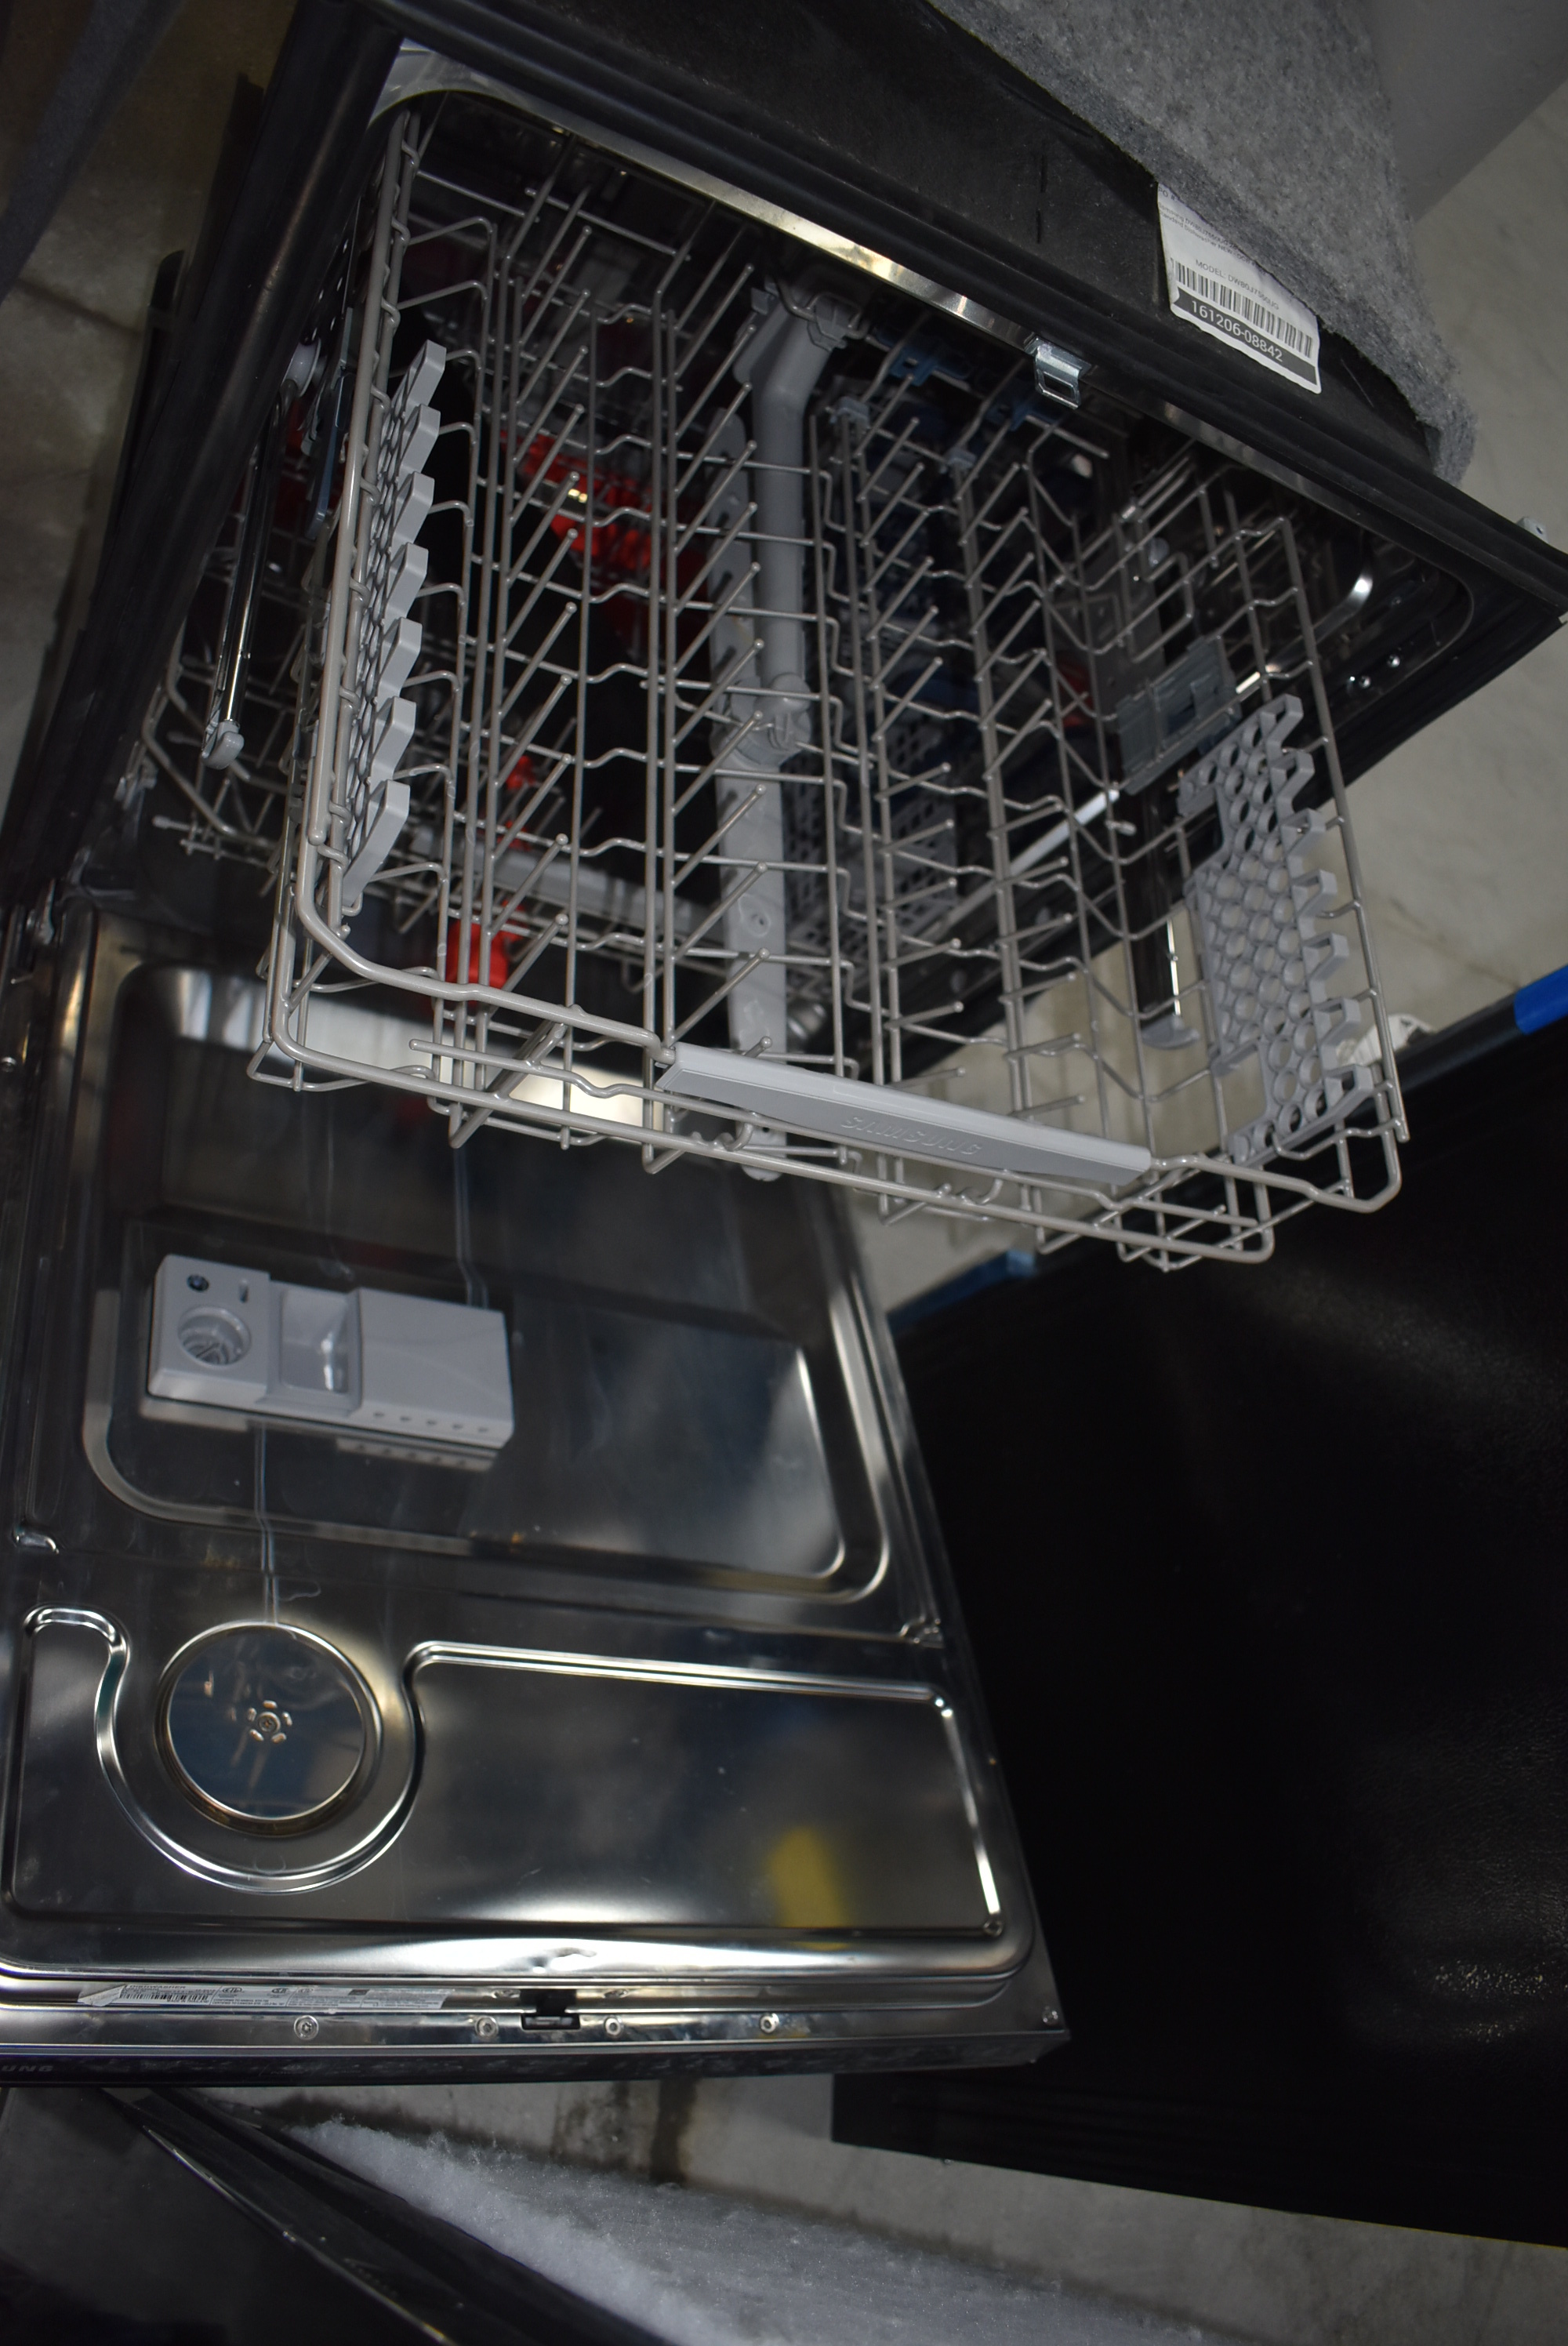 How To Reset Samsung Dishwasher Dw80j7550ug